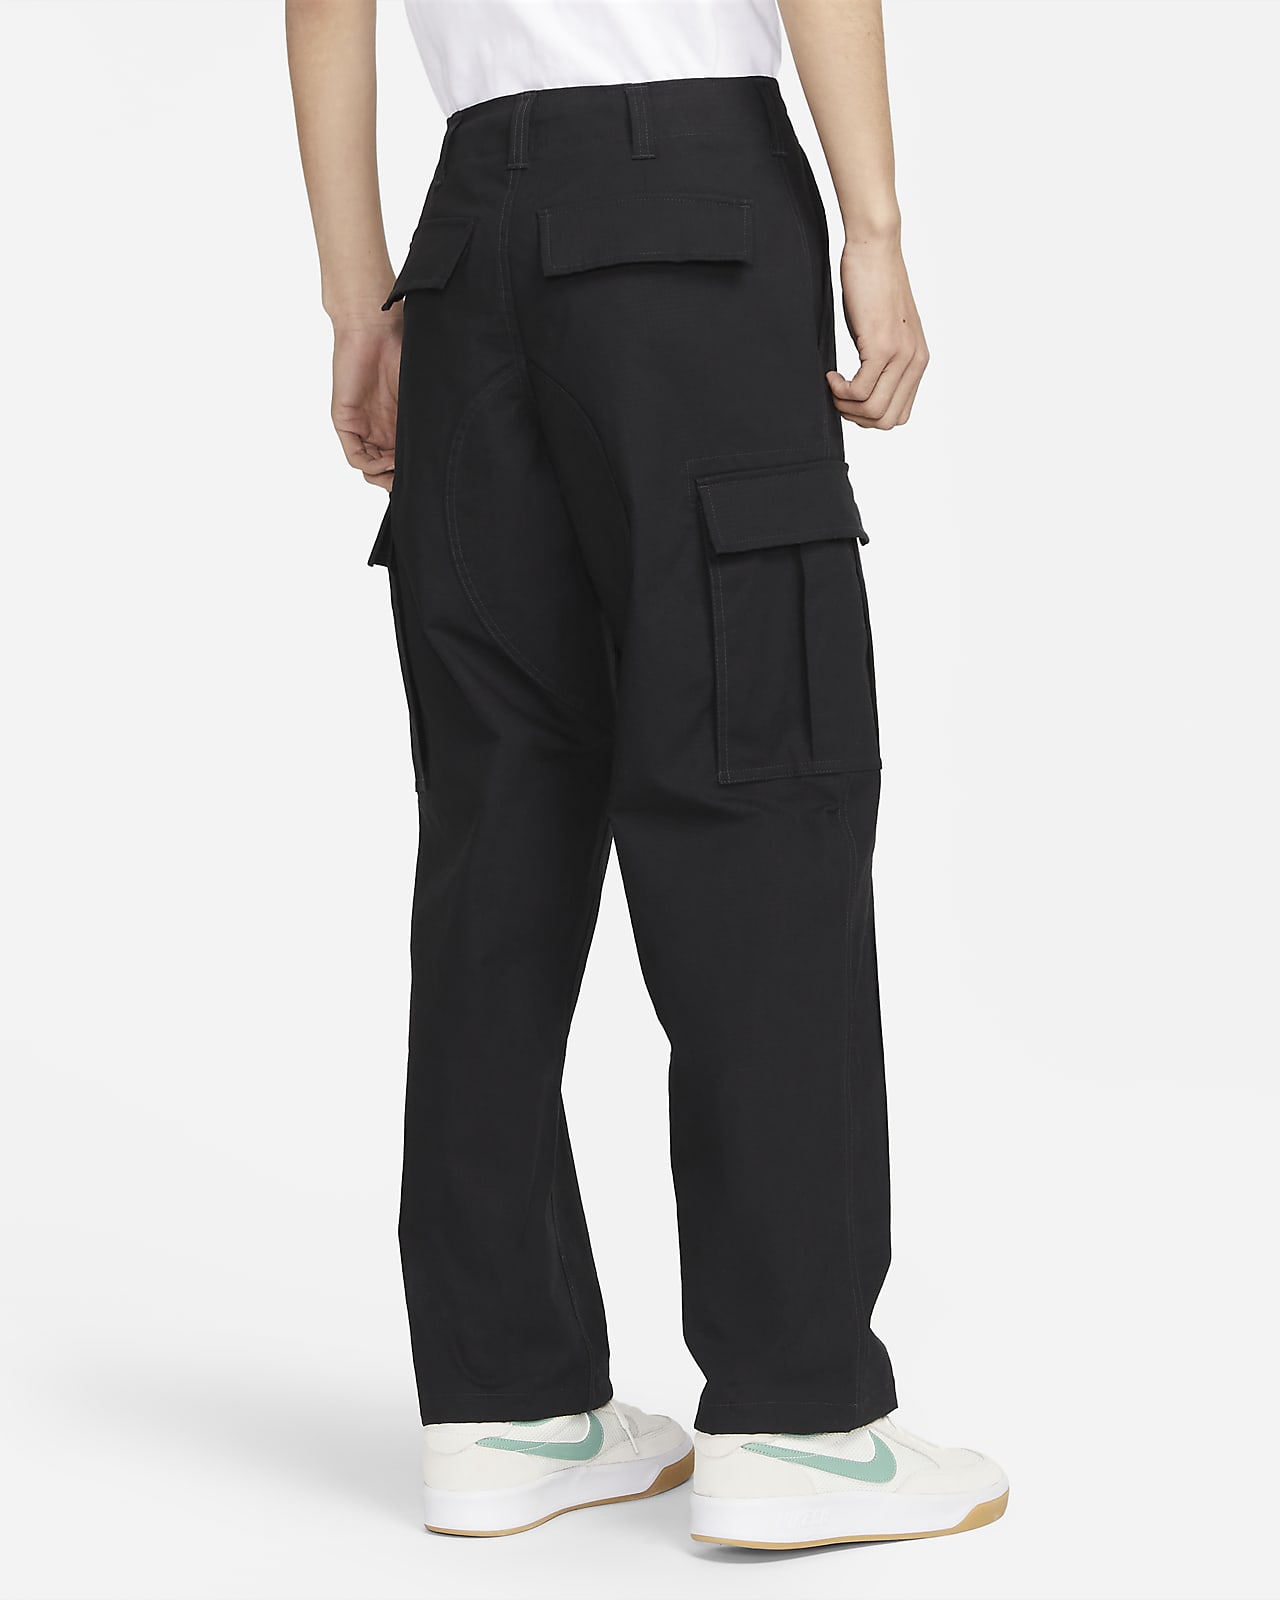 Buy Black Trousers  Pants for Women by Oxolloxo Online  Ajiocom